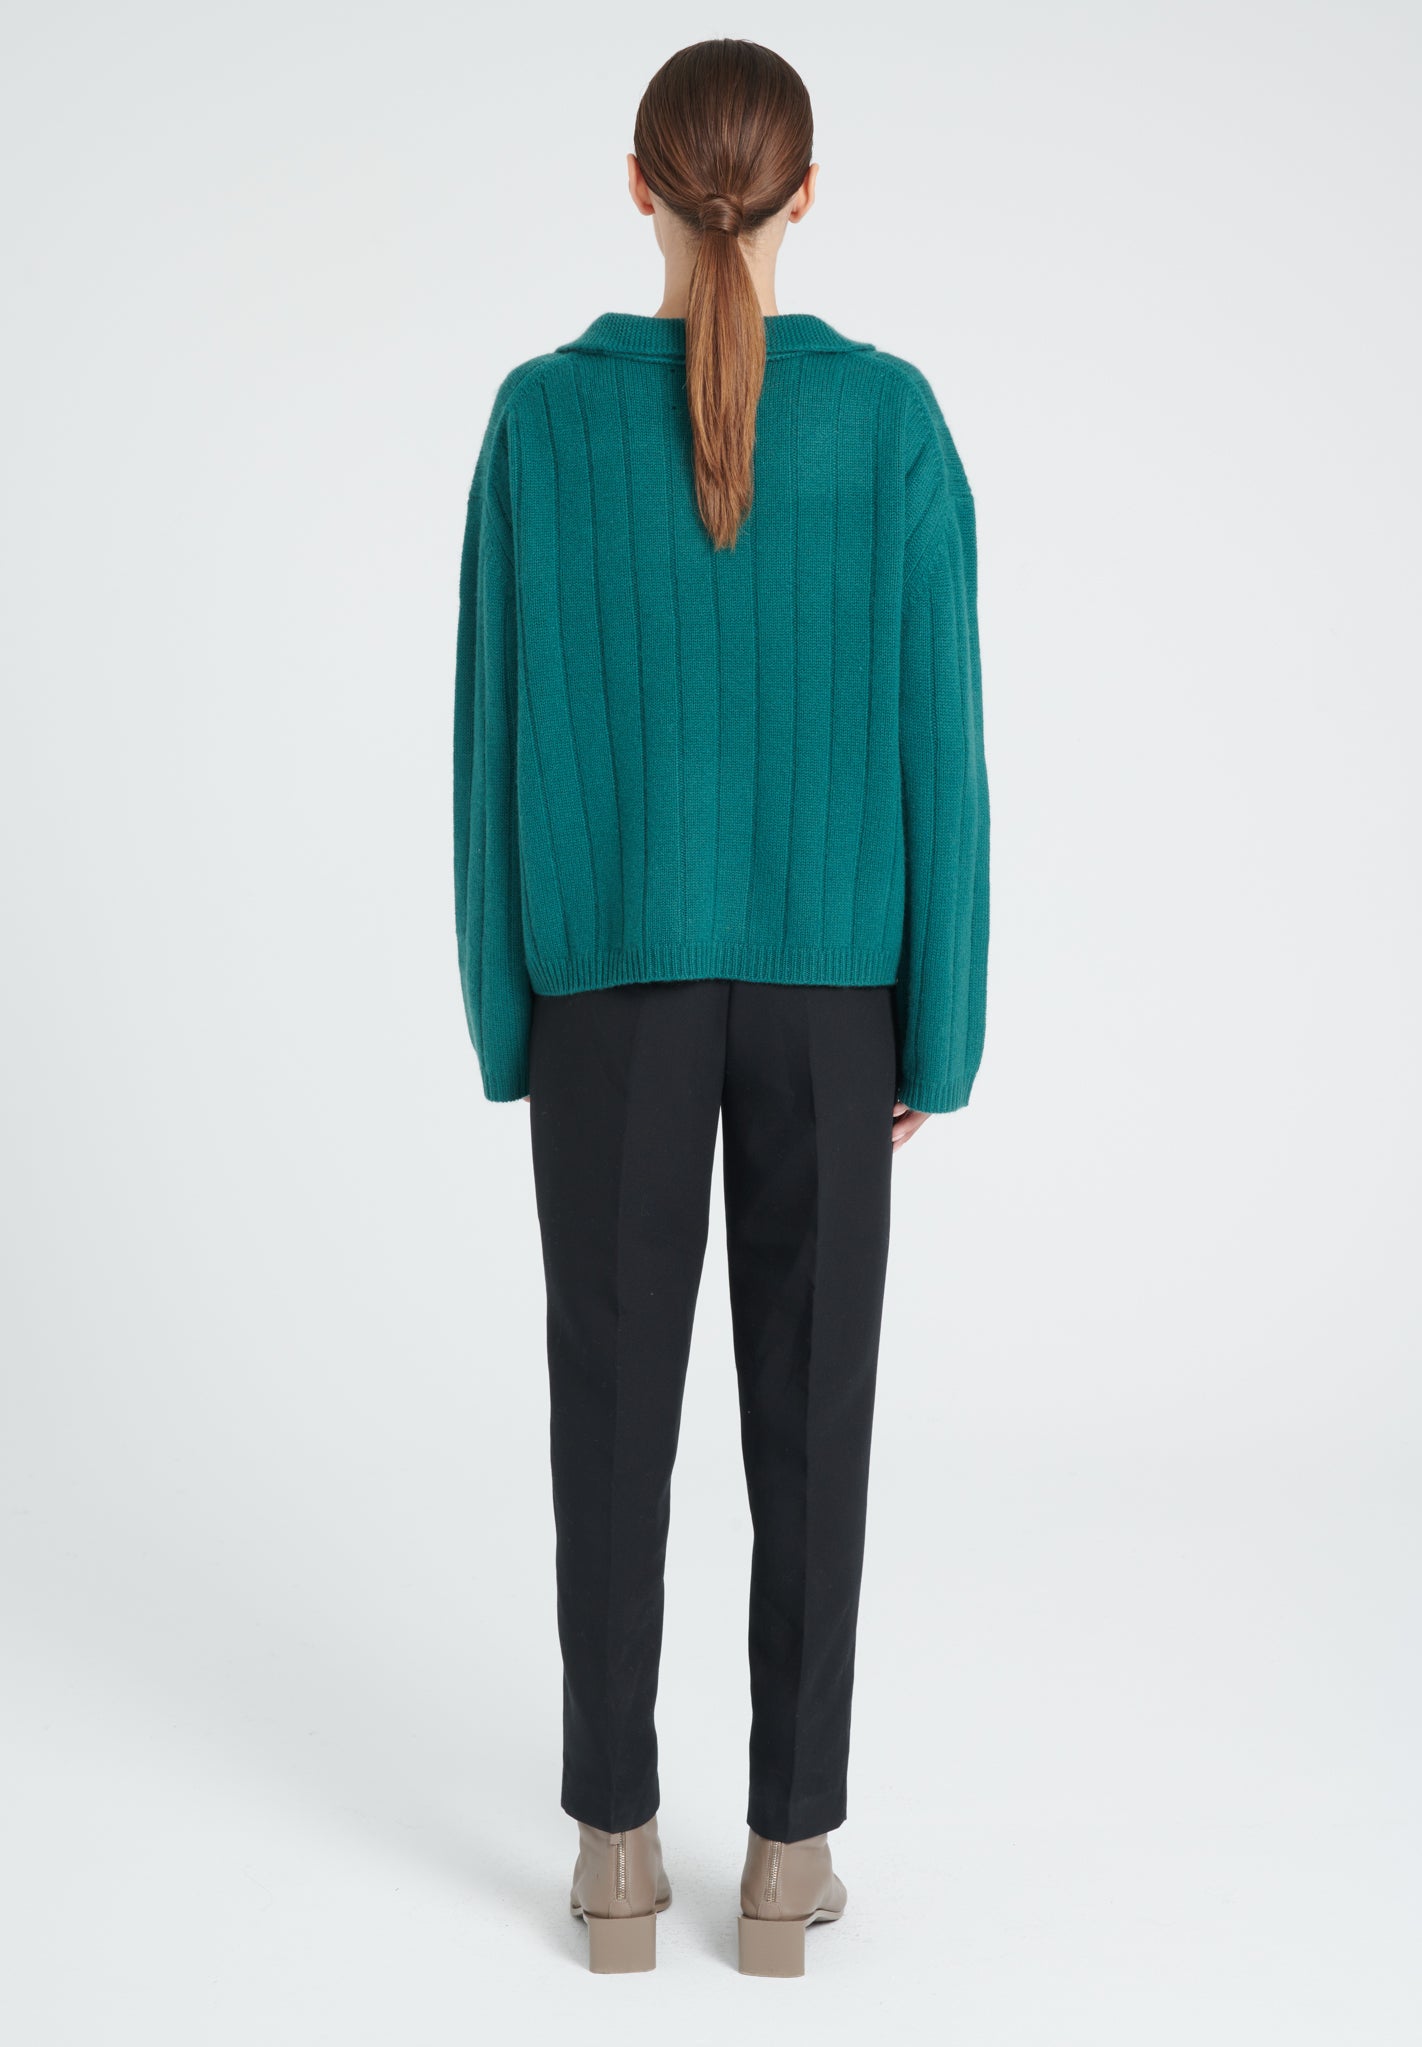 ZAYA 17 Dark green 6-thread cashmere sweater with peter pan collar